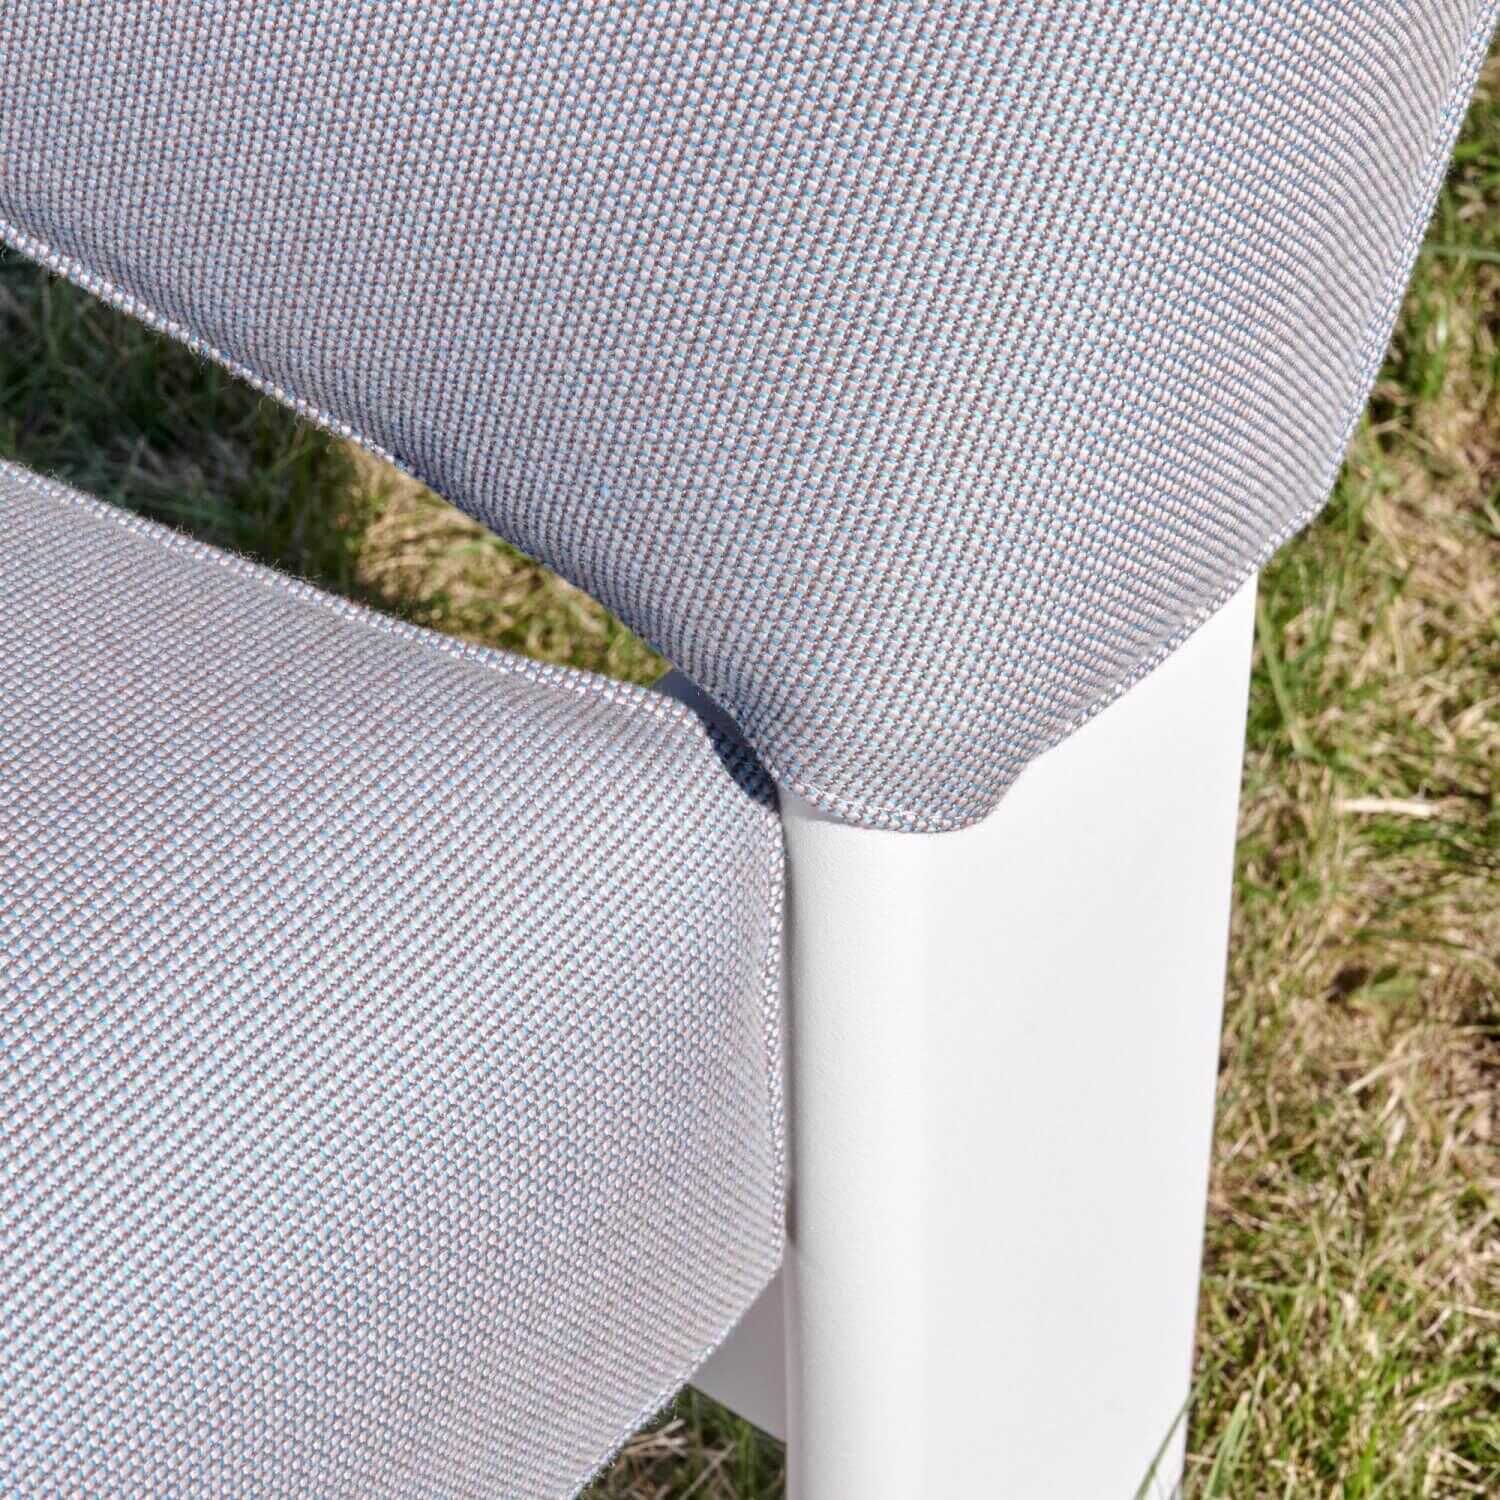 Clubsessel Outdoor Band Bezug Stoff Fjord Laminate Gestell Aluminium Pulverbeschichtet Farbe Bone